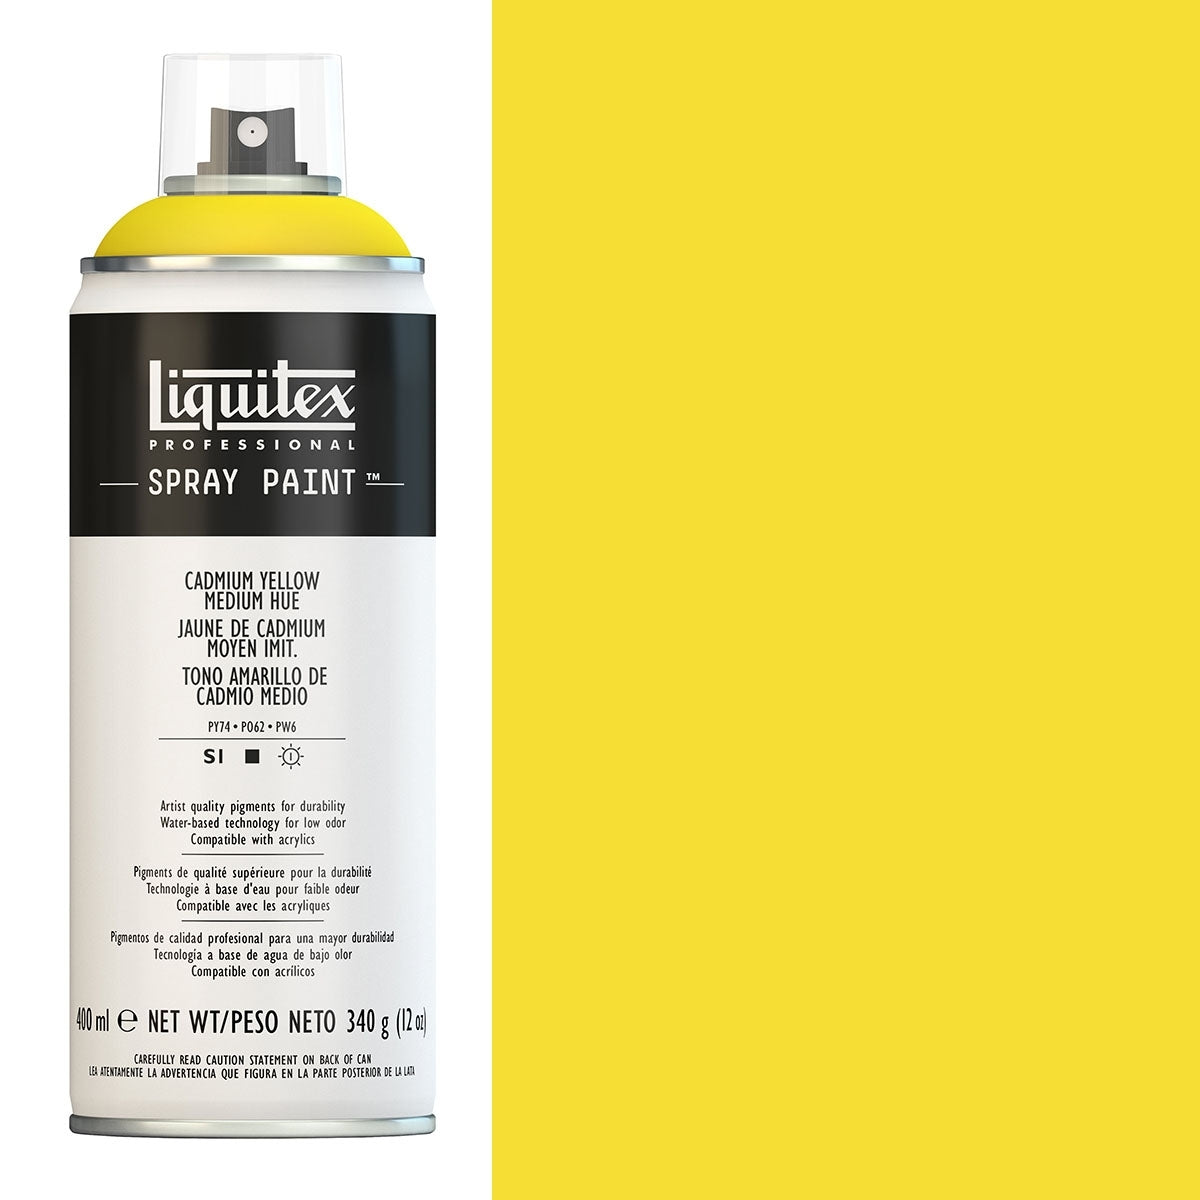 Liquitex Professional Spray Paint - Iridescent Rich Silver, 400 ml can